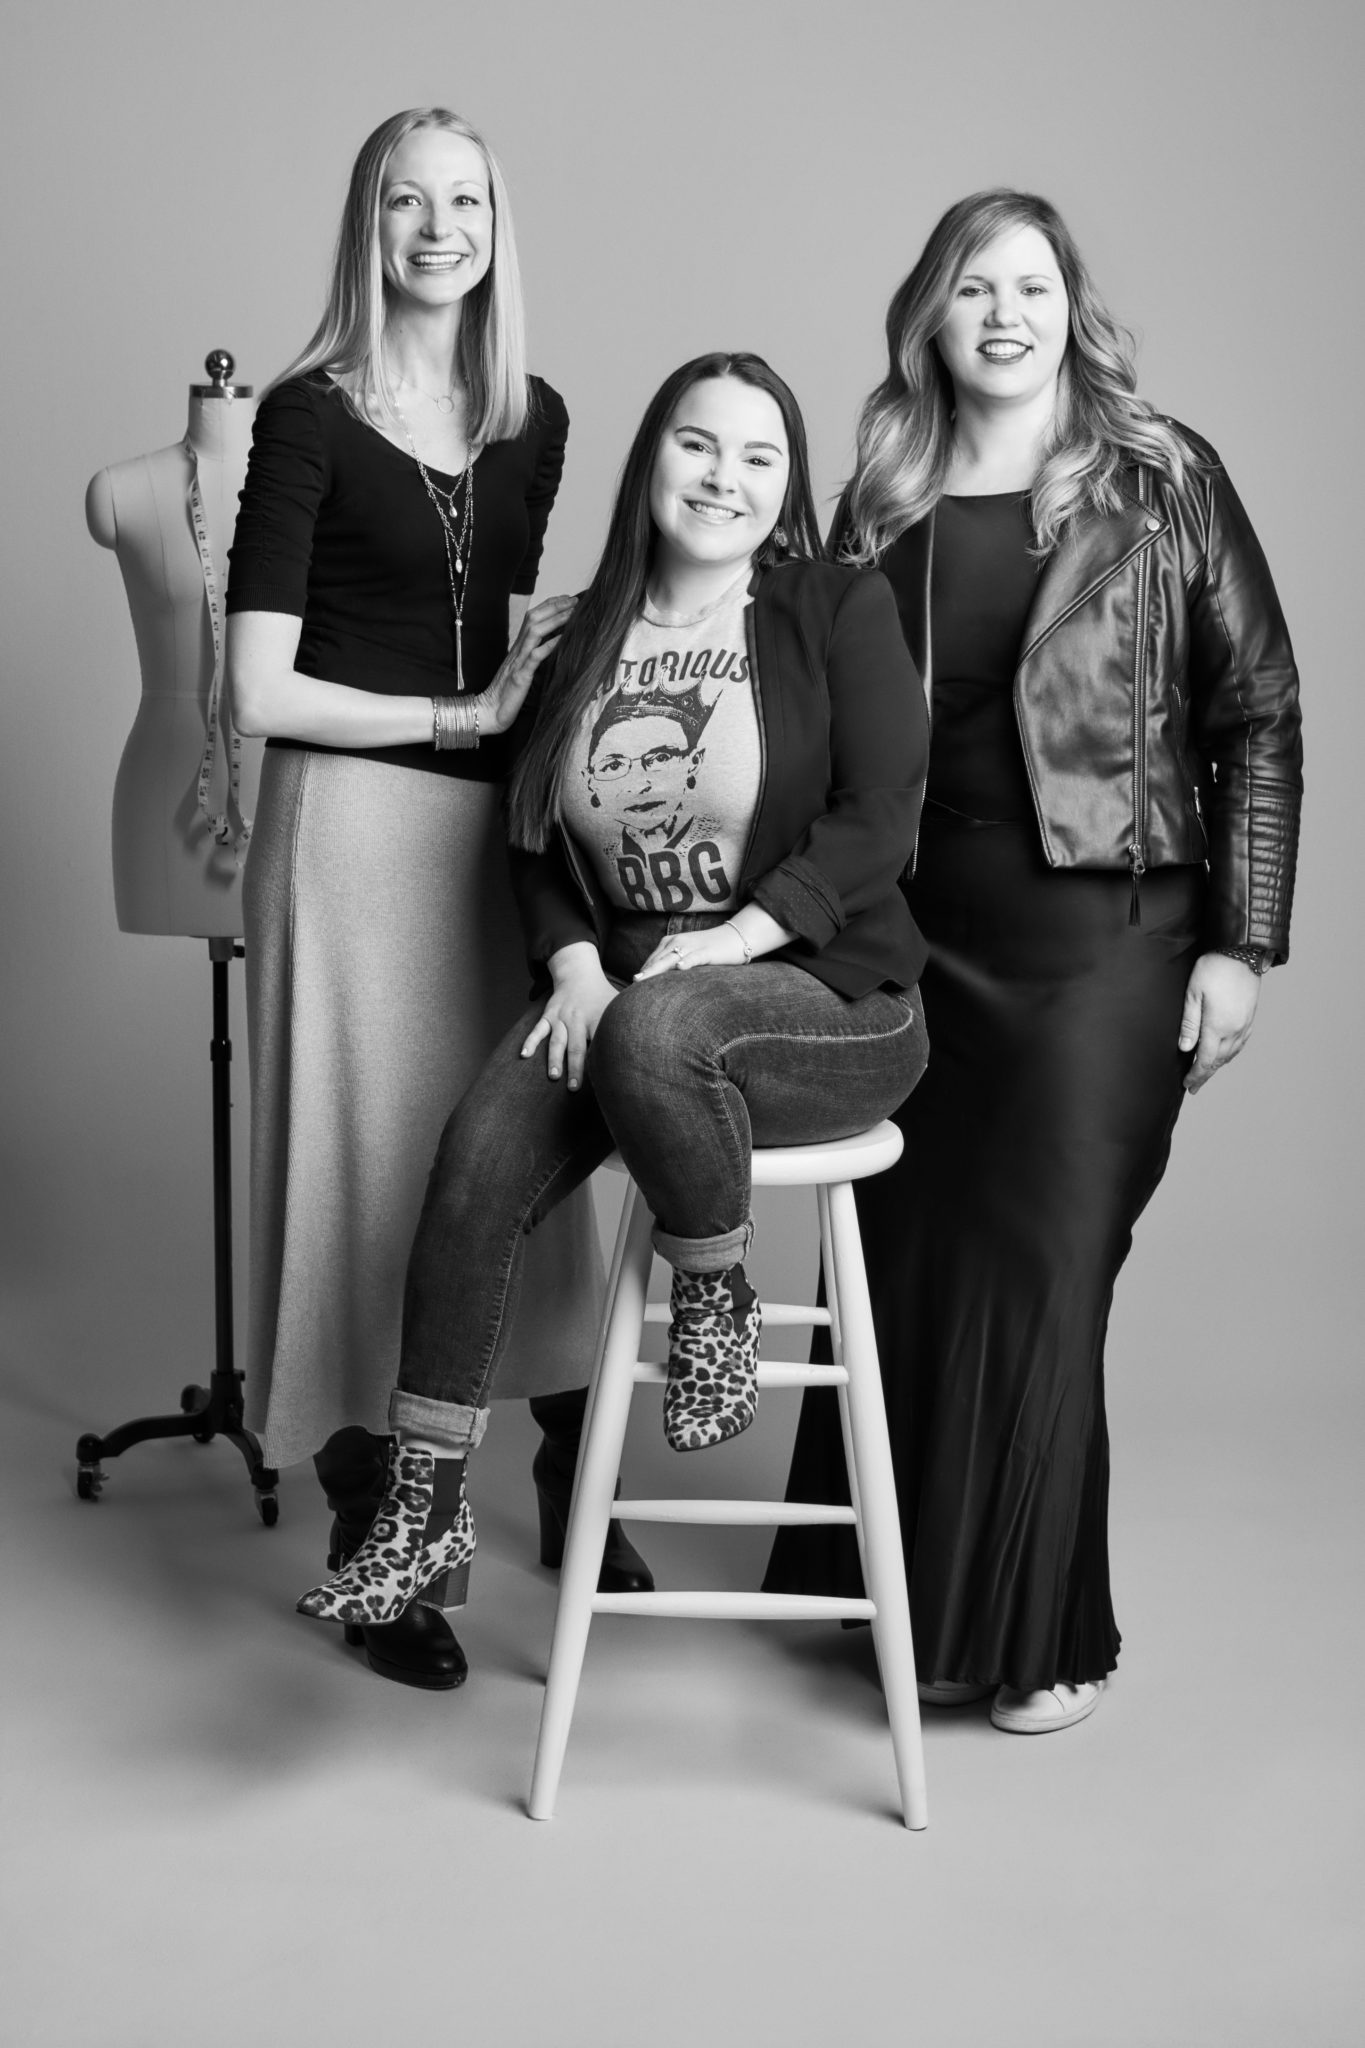 Three women from David's Bridal's merchandising team in a photo studio setting